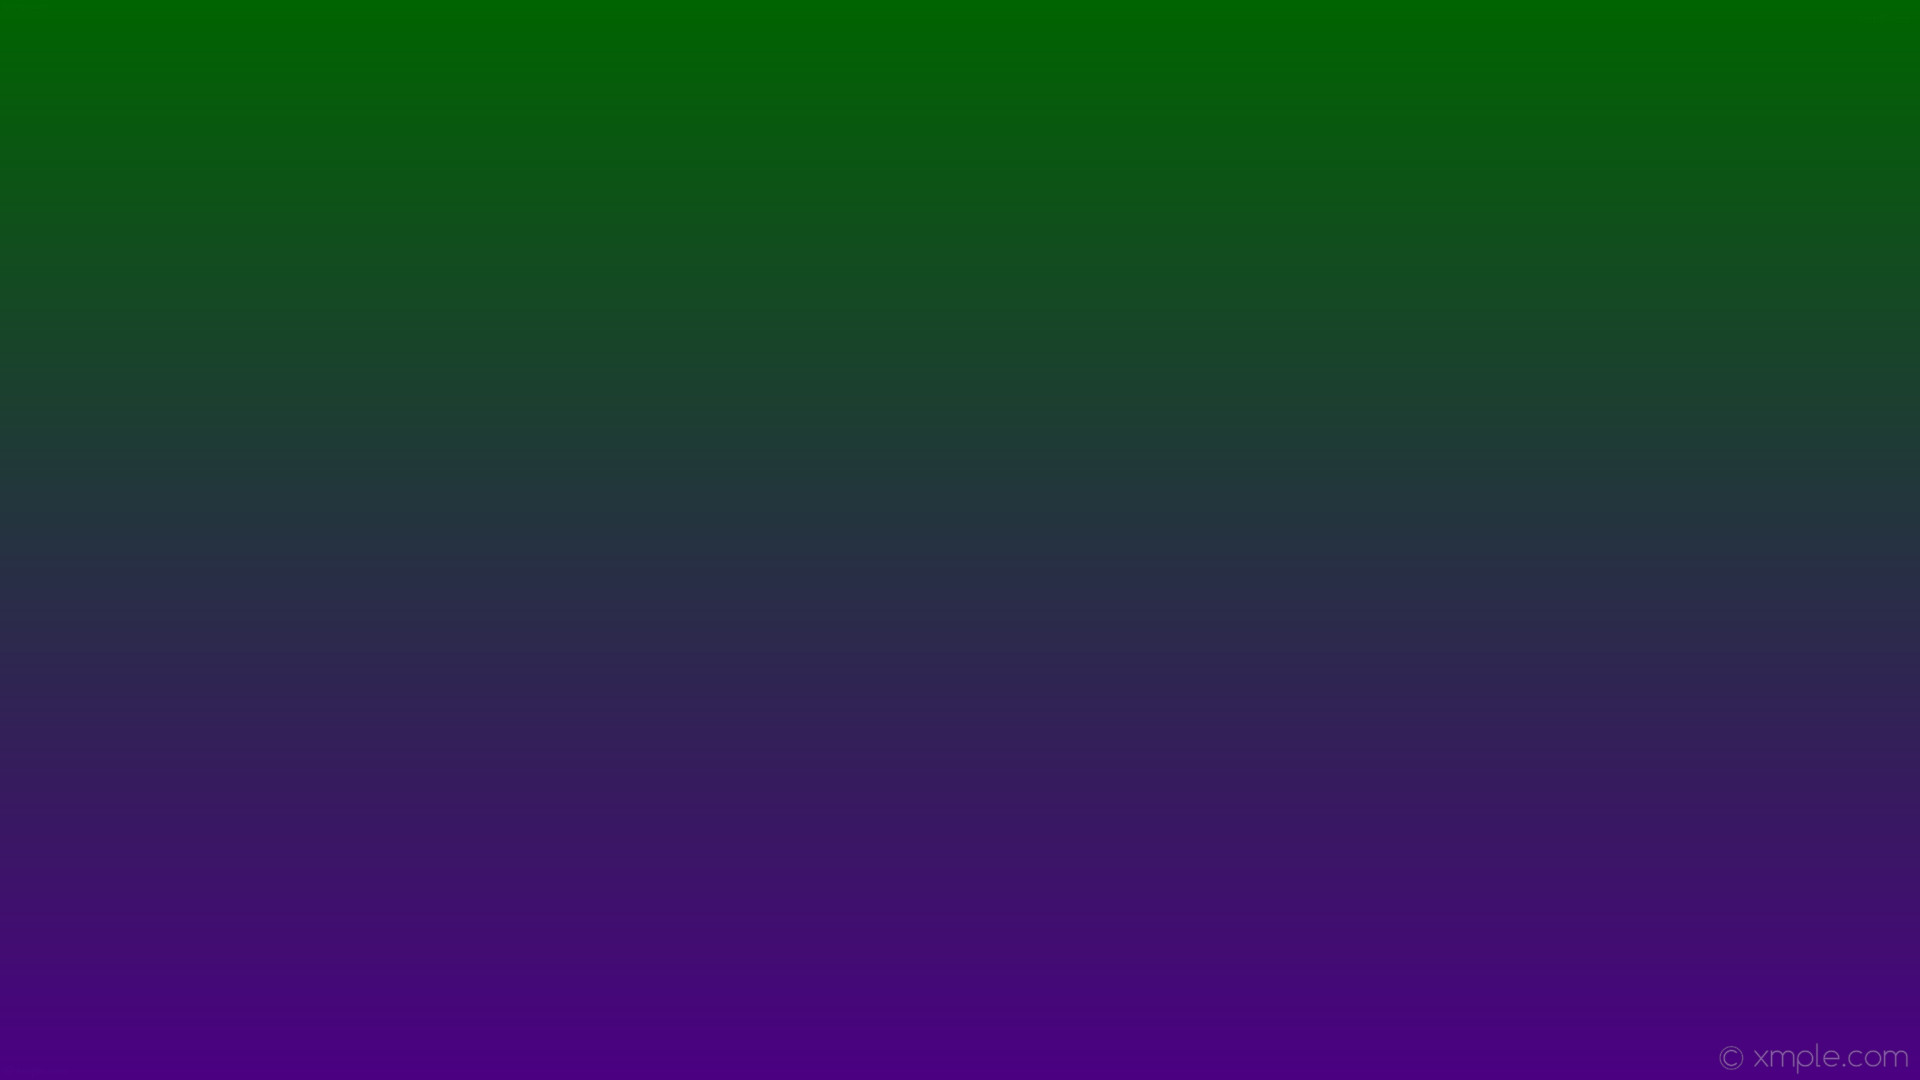 1920x1080 wallpaper gradient linear purple green indigo dark green #4b0082 #006400  270Â°